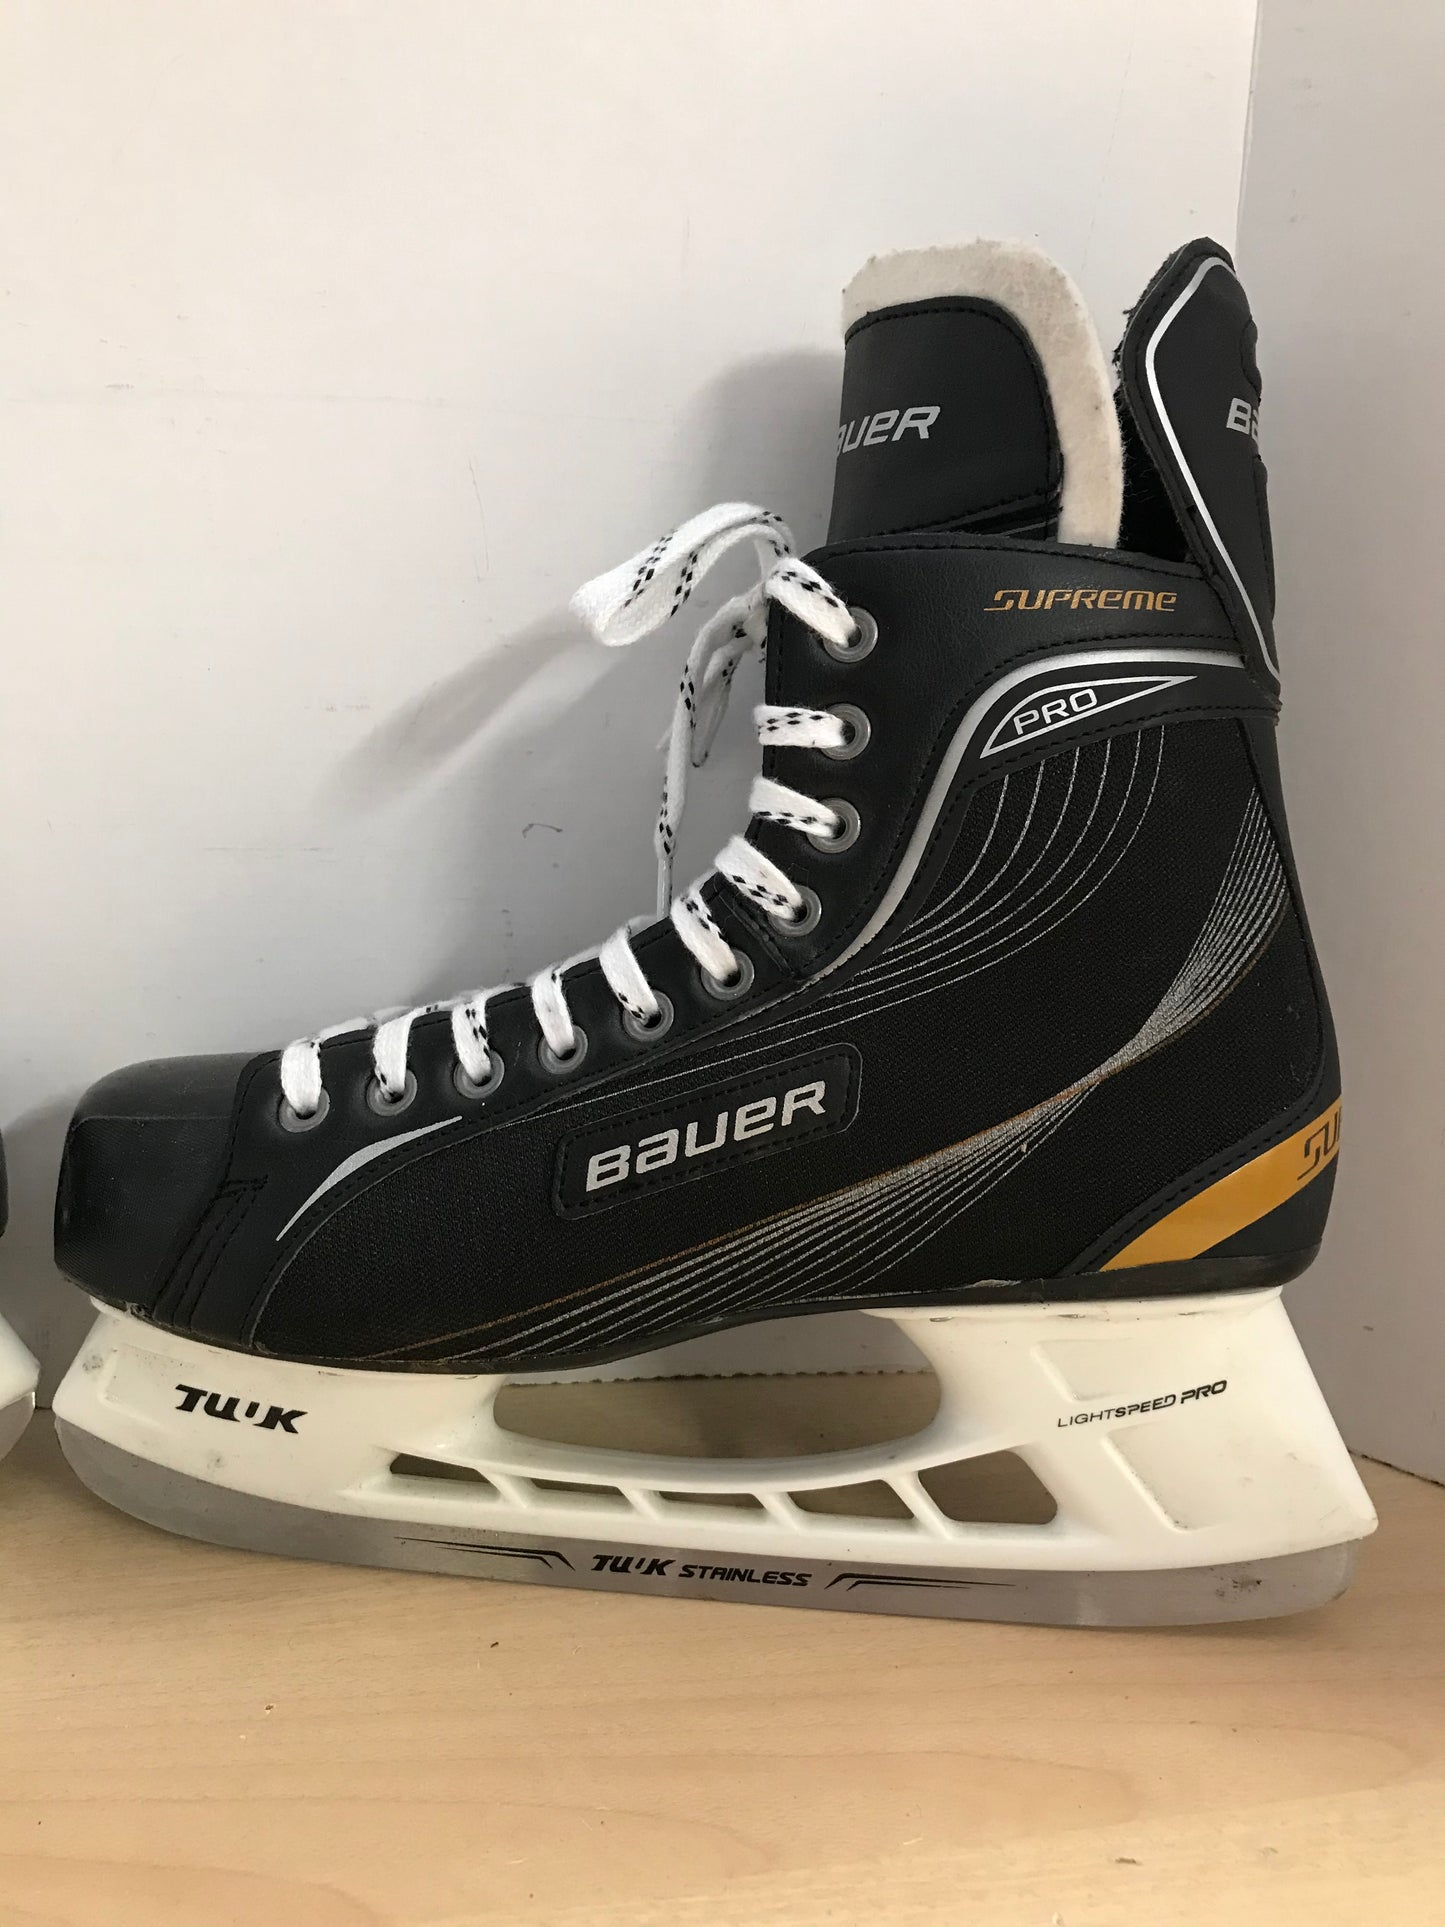 Hockey Skates Men's Size 12.5 Shoe 11 Skate Size Bauer Supreme Pro New Demo Model